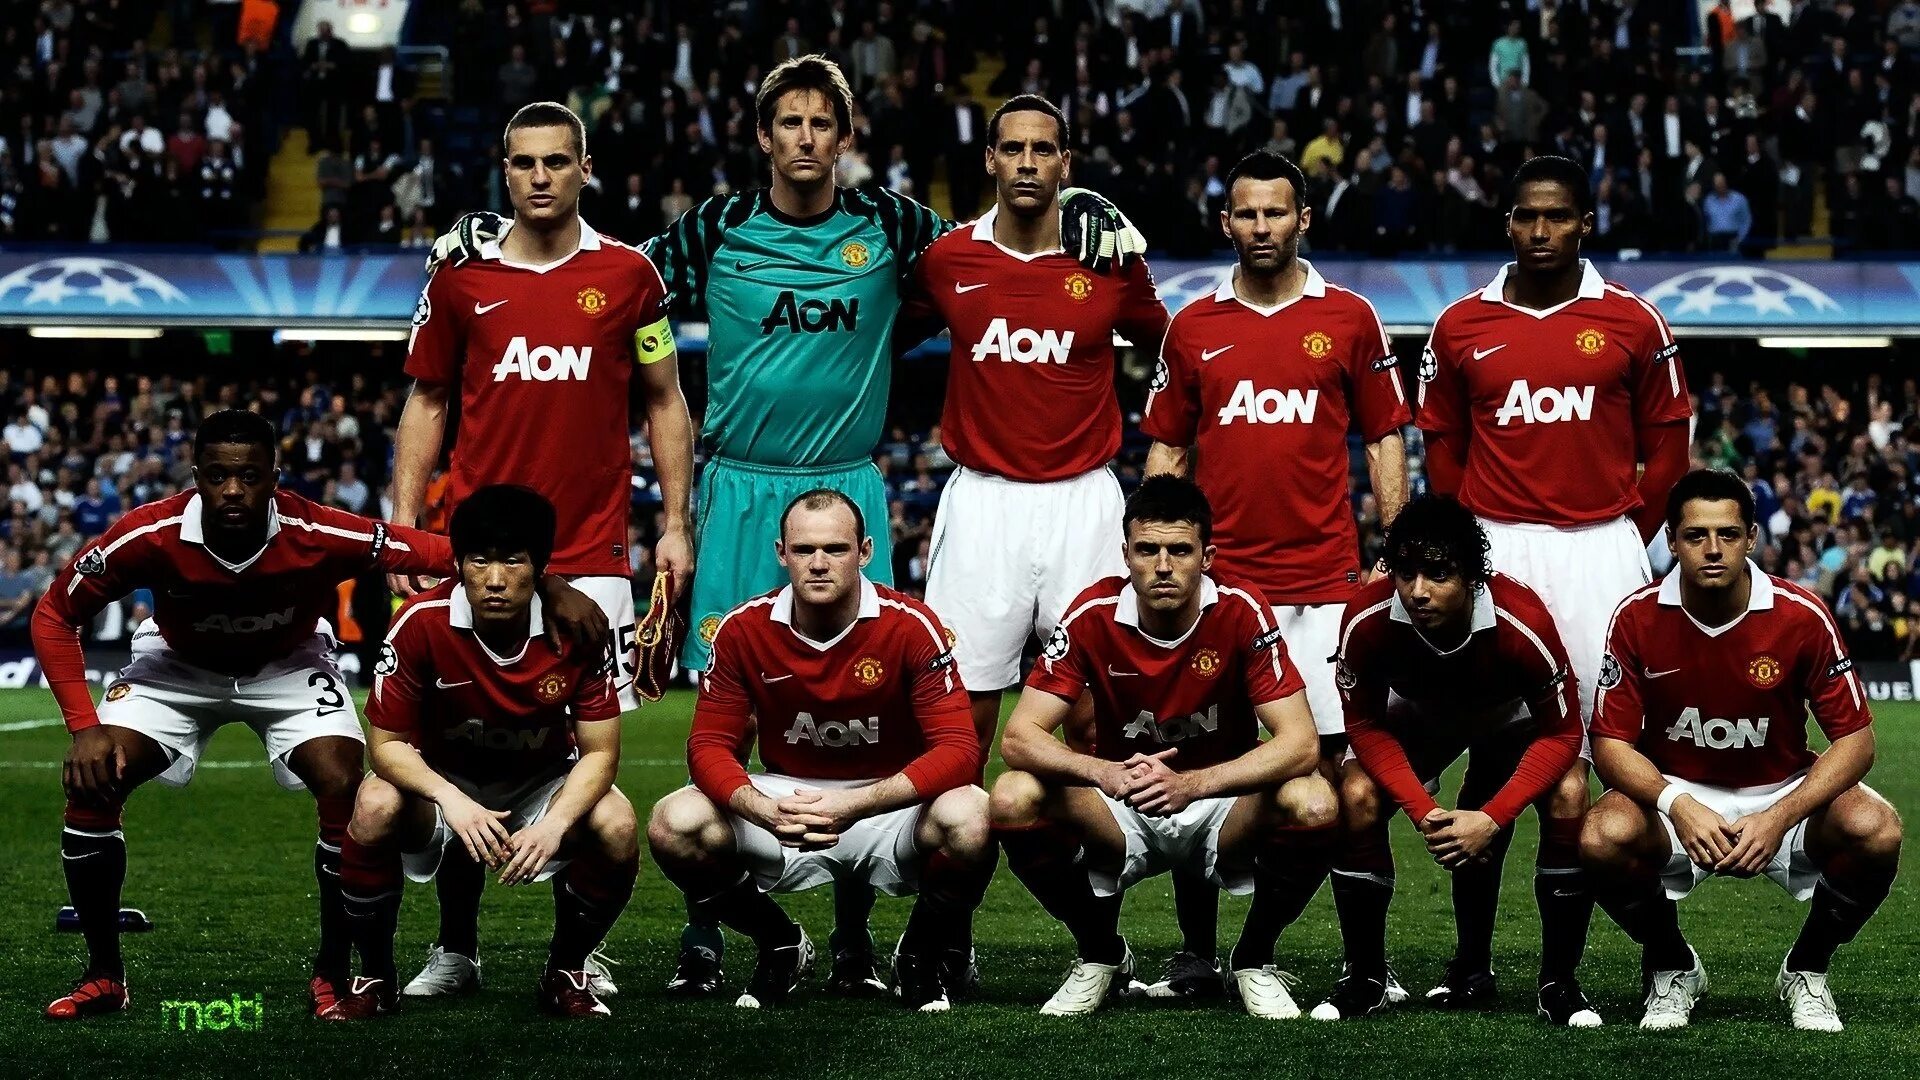 Обои на телефон команда. Манчестер Юнайтед команда 2008. Футбольная команда Манчестер Юнайтед. Команда Манчестер Юнайтед. Манчестер Юнайтед 2008 фото.